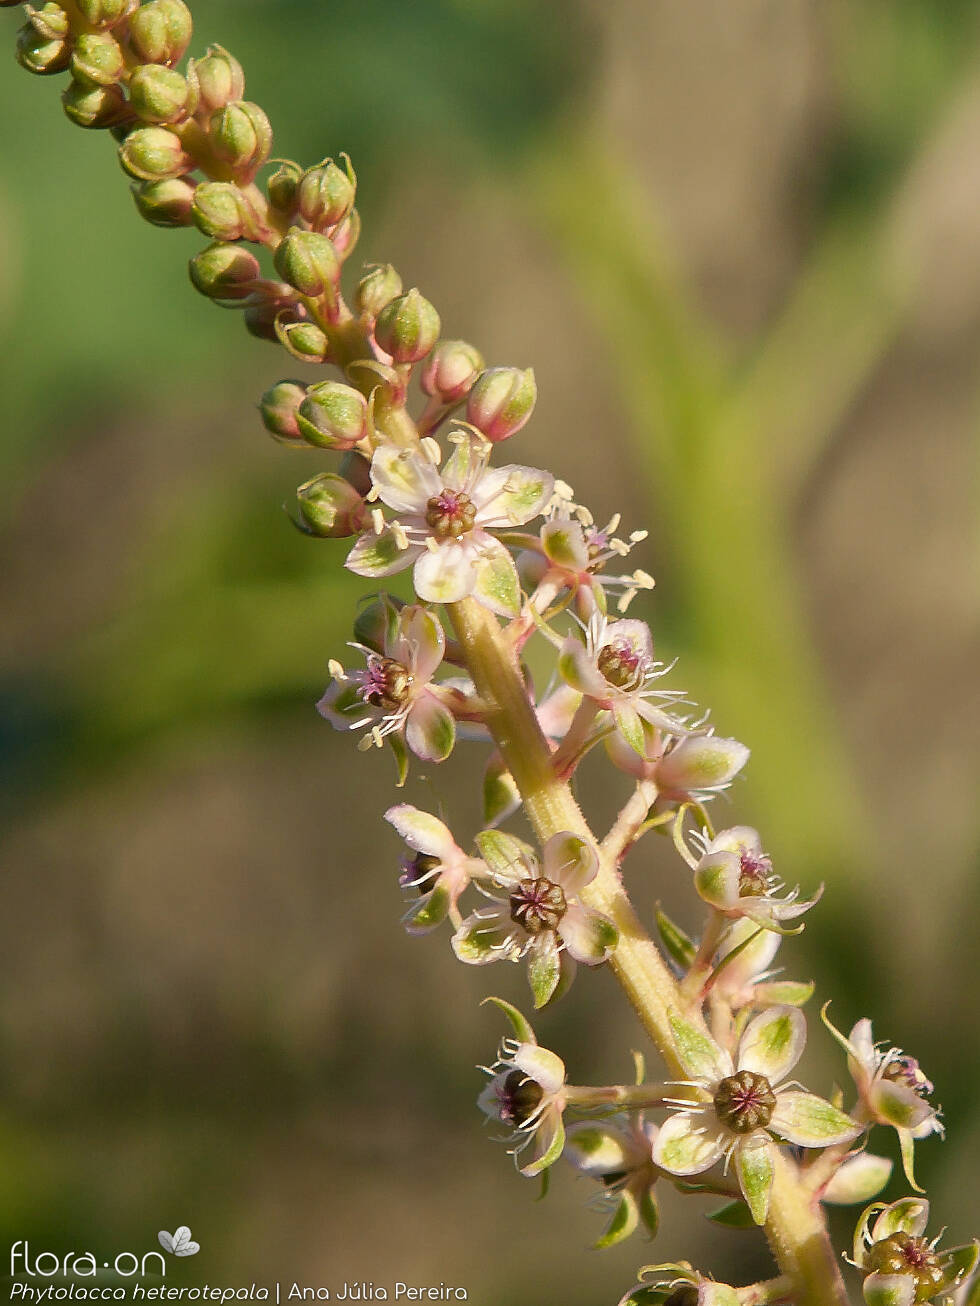 Phytolacca heterotepala - Flor (geral) | Ana Júlia Pereira; CC BY-NC 4.0